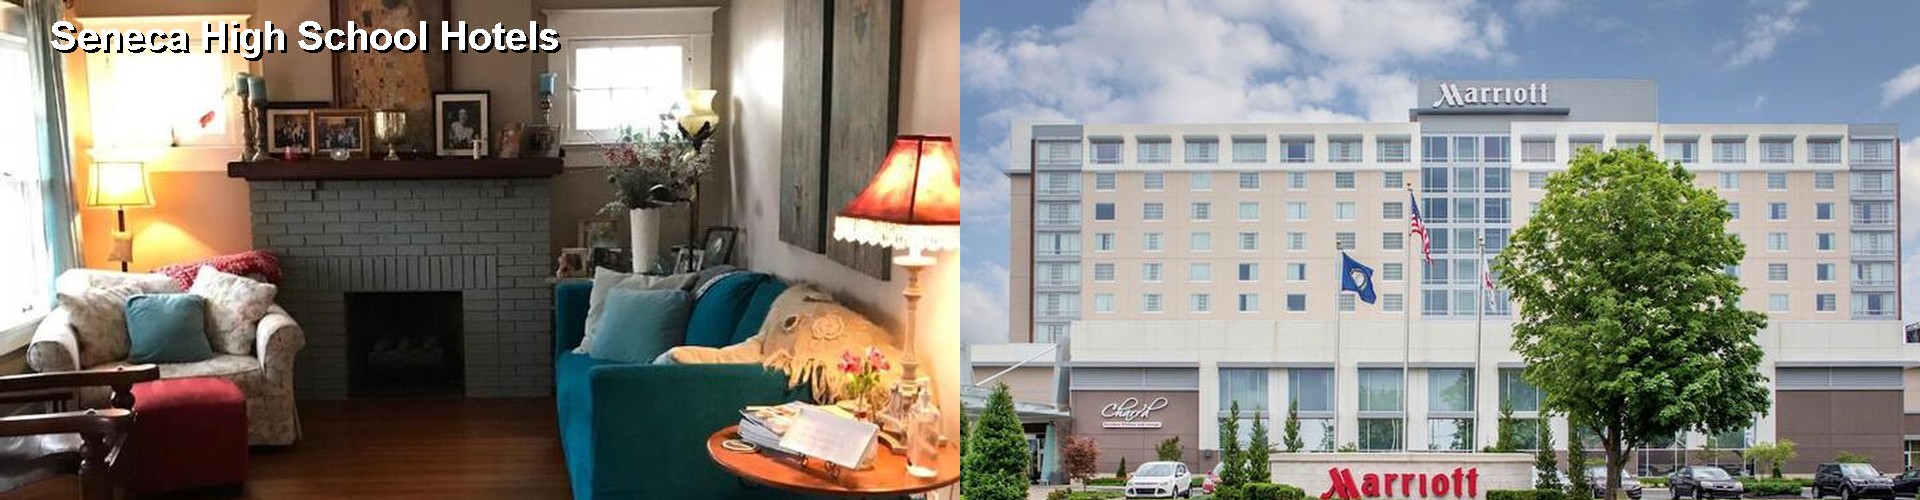 4 Best Hotels near Seneca High School